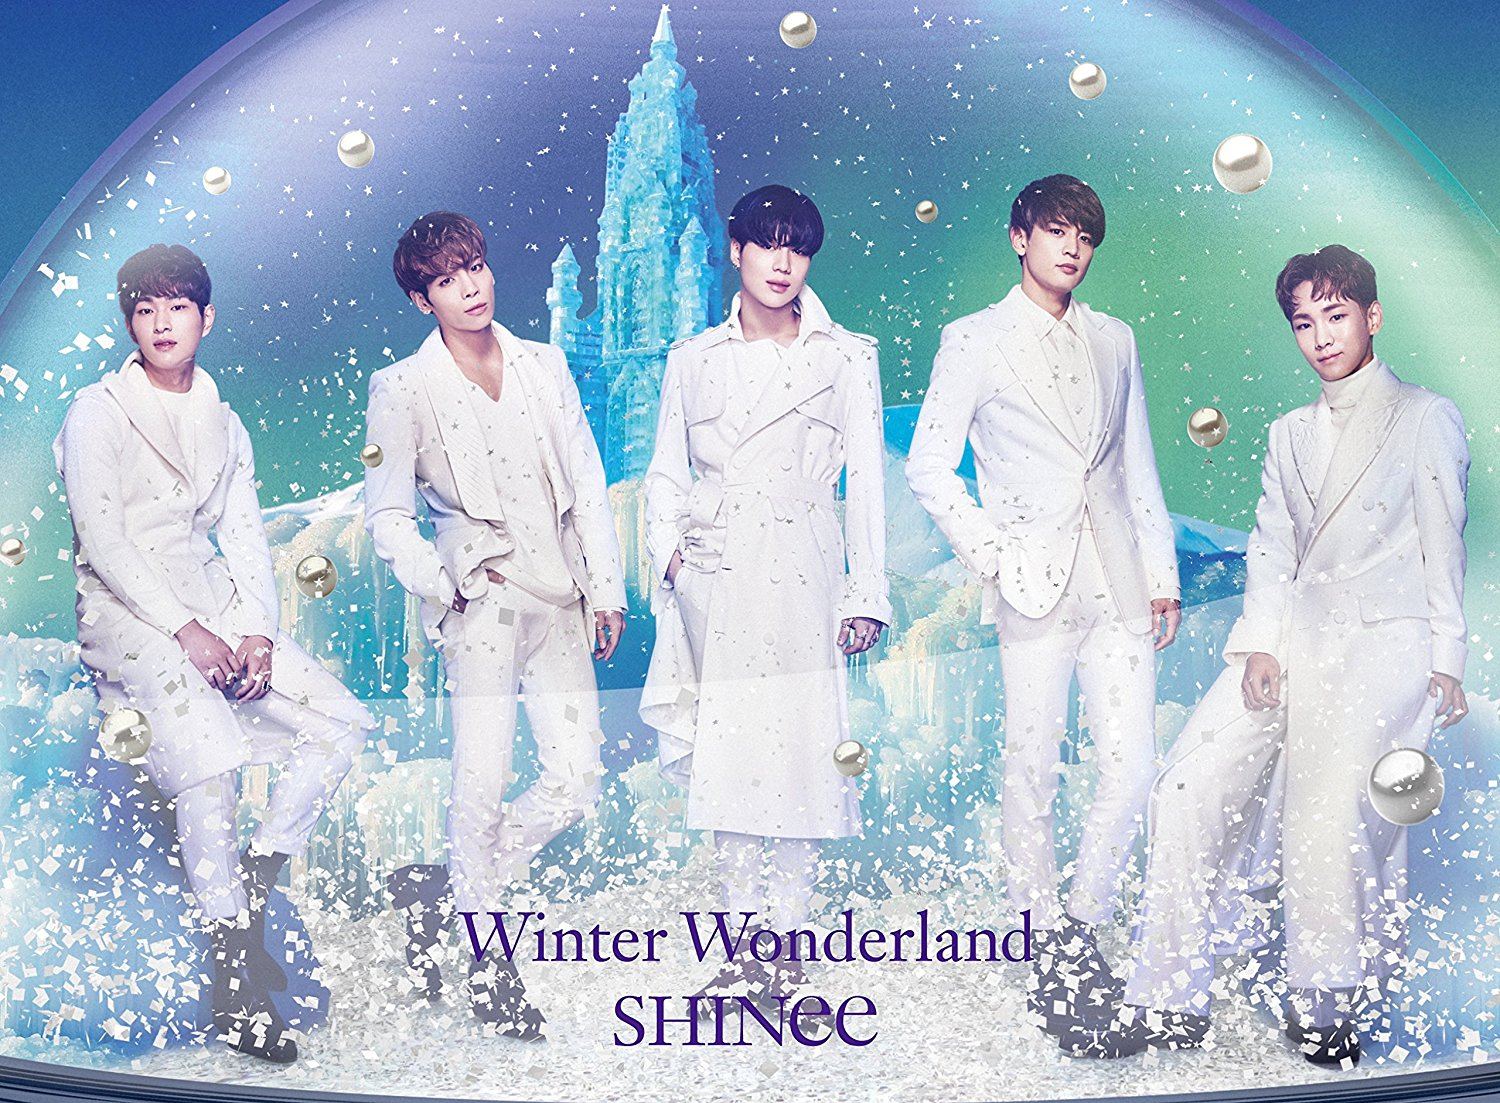 Winter Wonderland [CD+DVD Limited Edition] (Shinee)